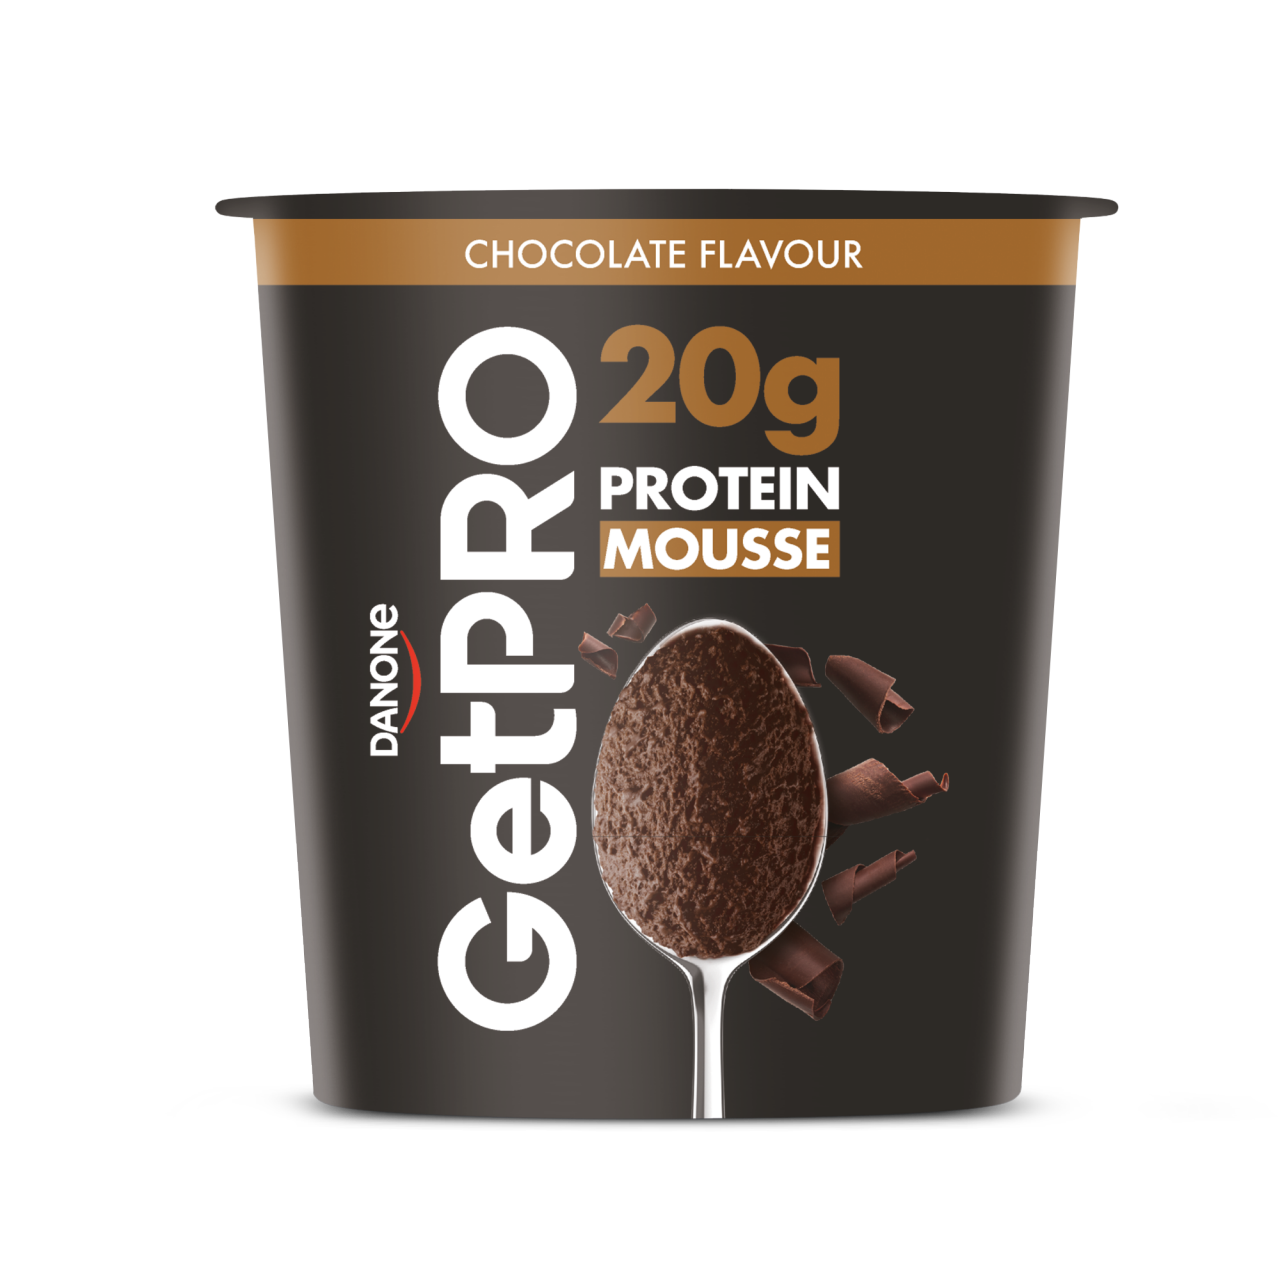 GetPRO Chocolate flavour mousse